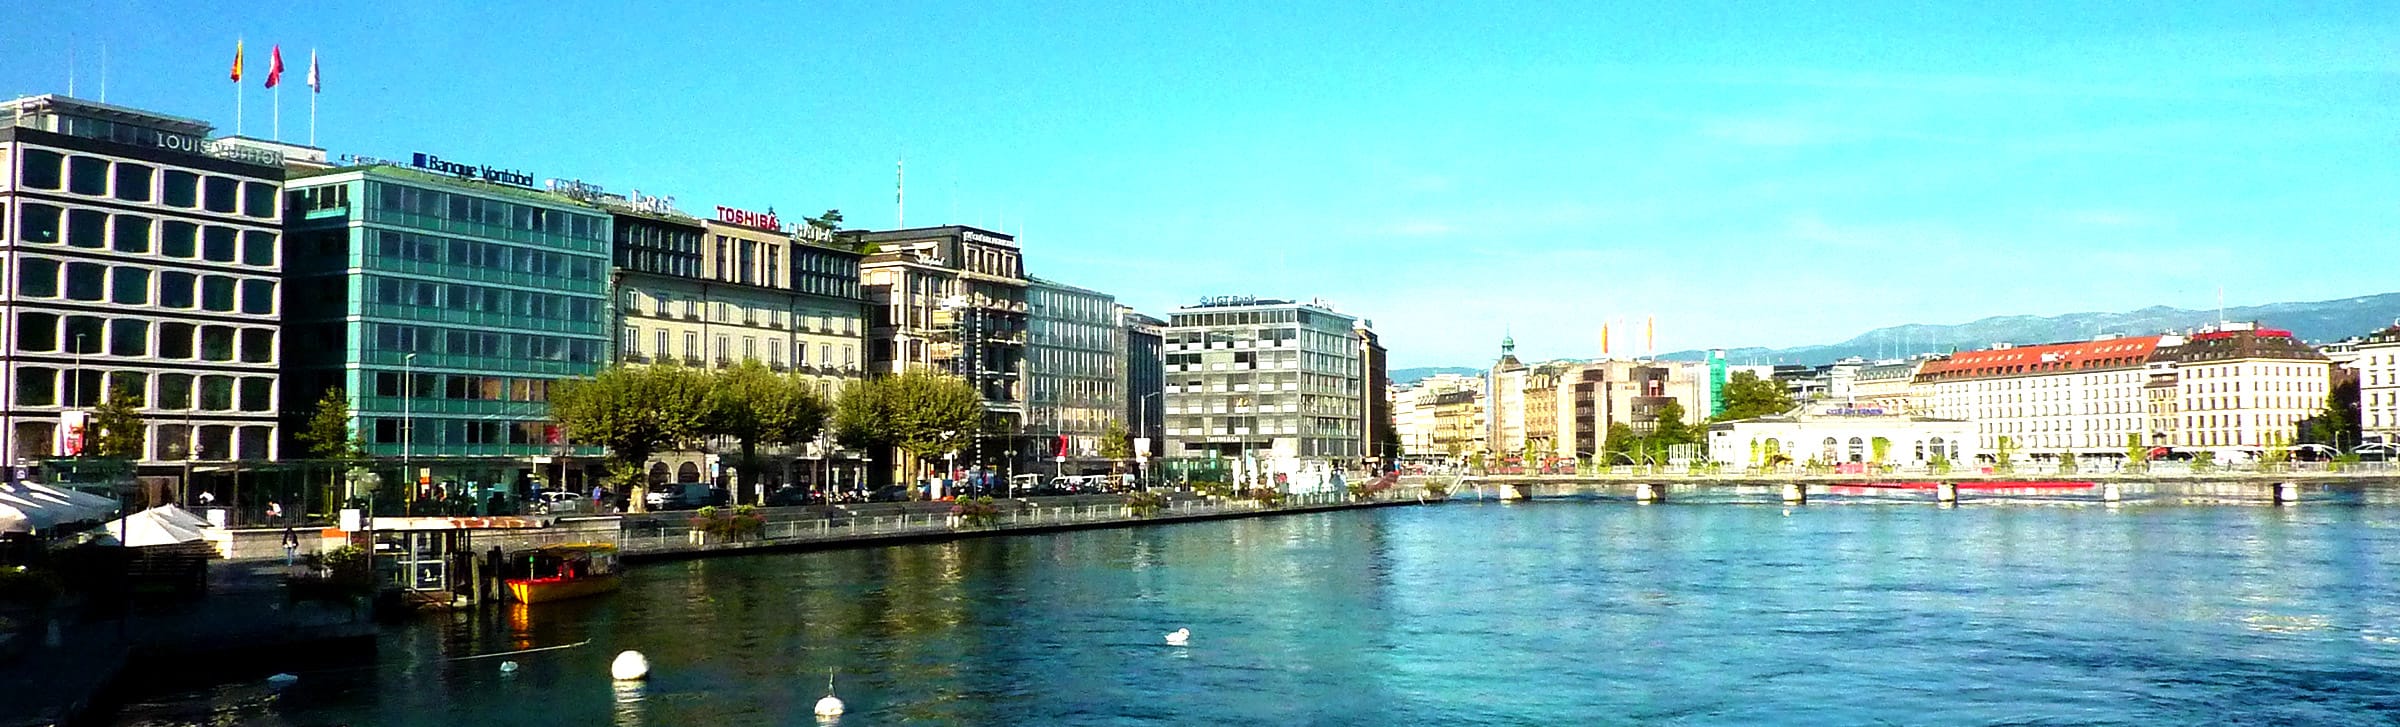 Geneva business district